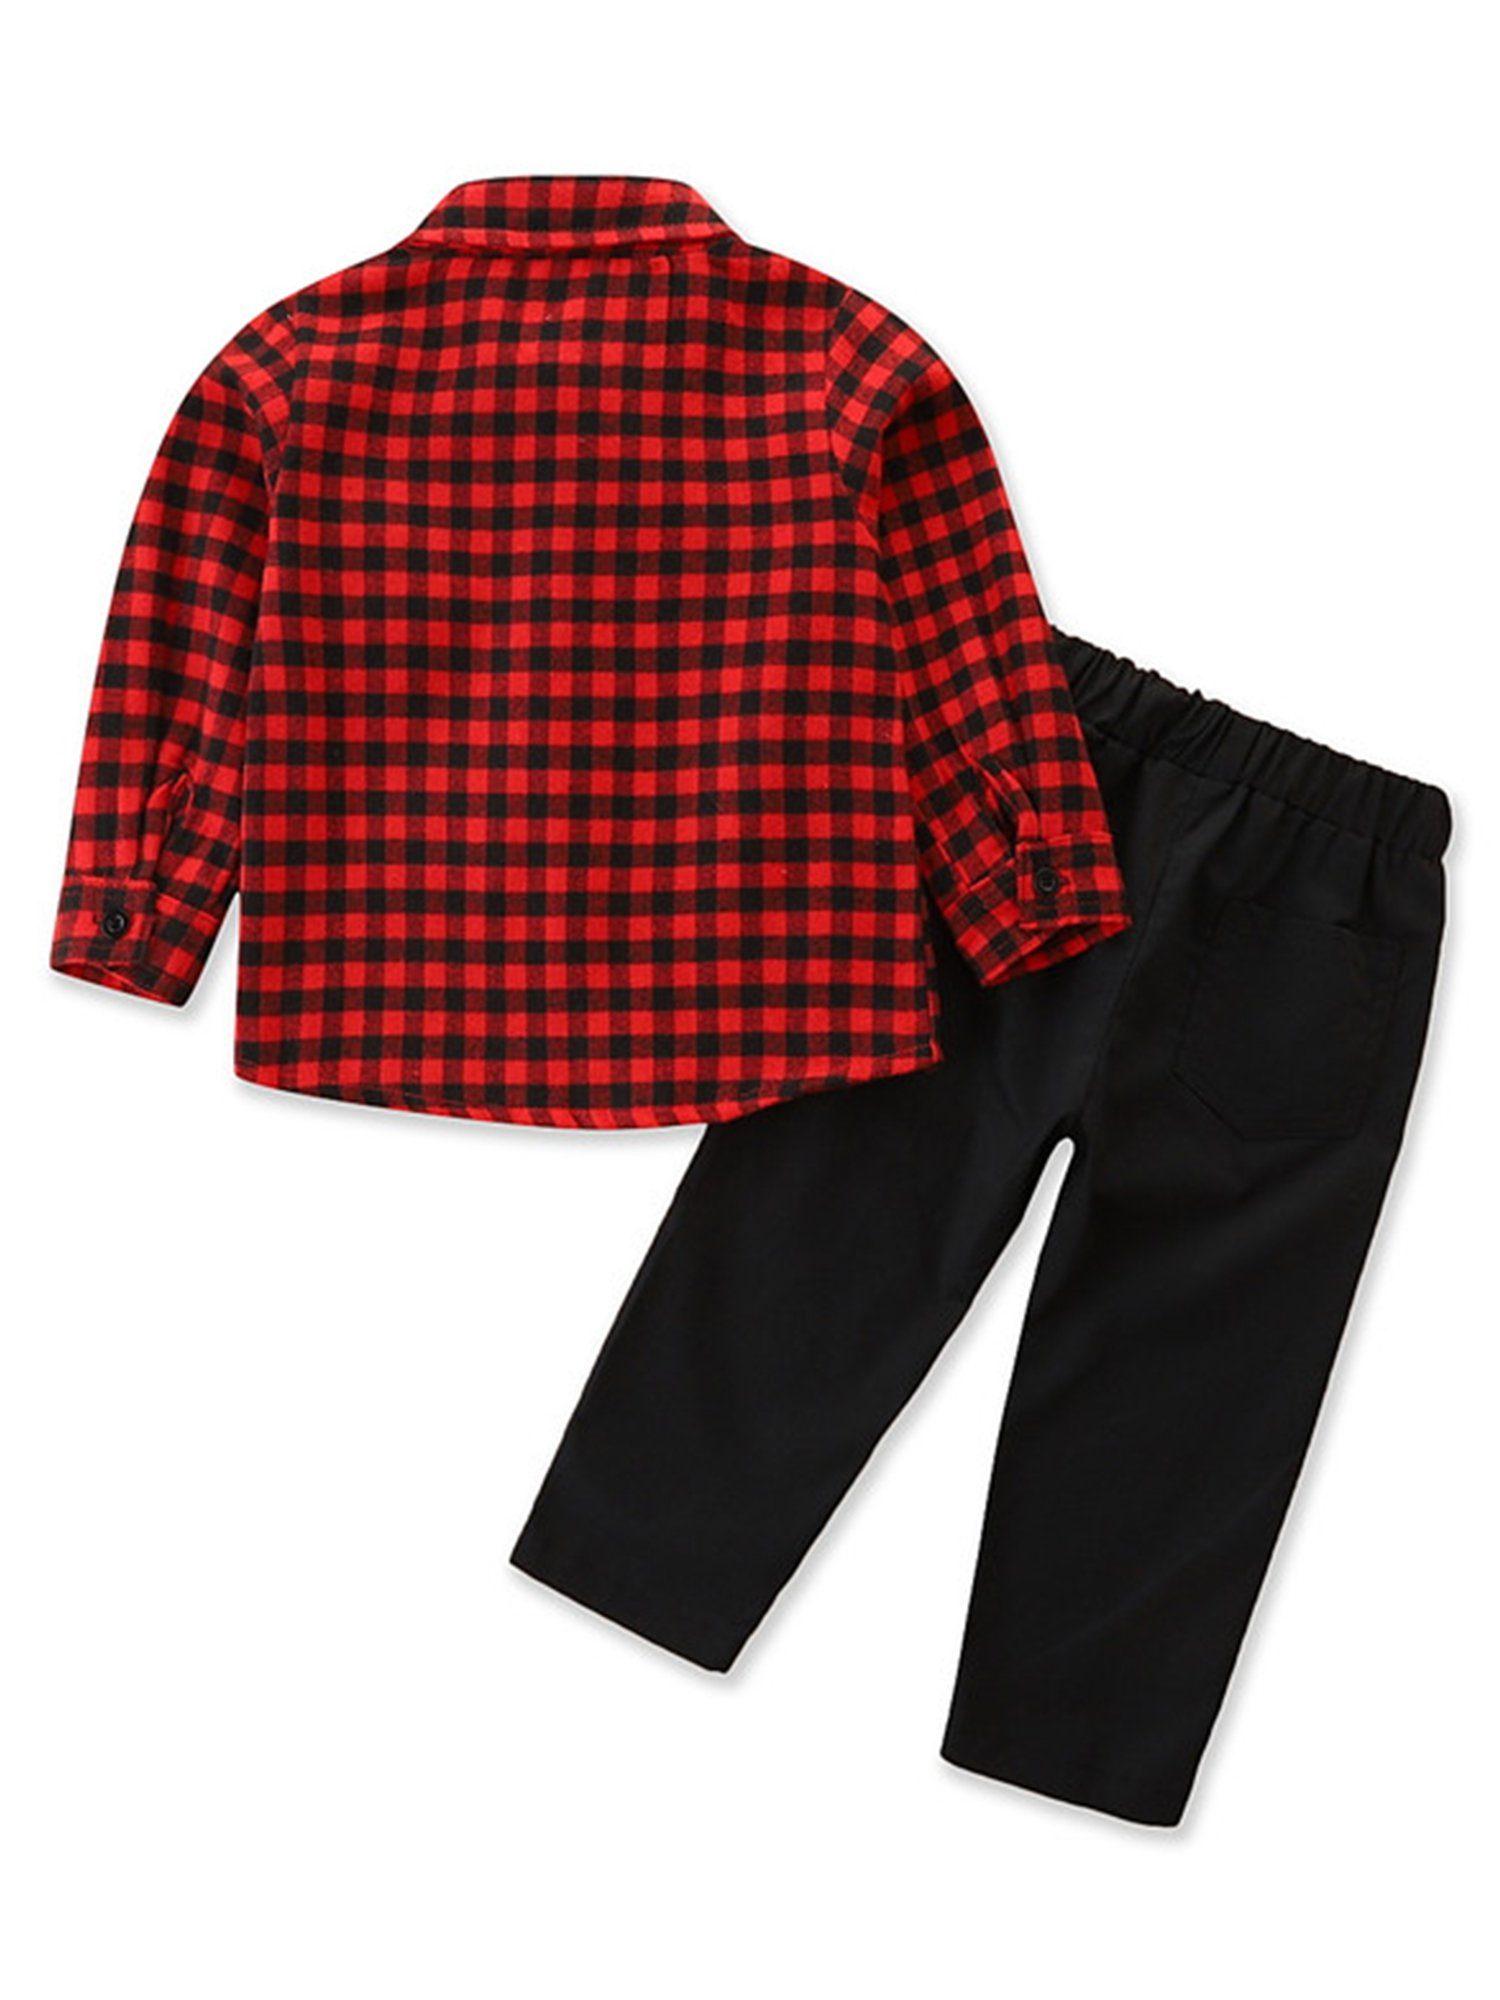 LAPA Shirt & Hose »Rot-schwarz kariertes Hemd + Stretchhose, 100%  Baumwolle« online kaufen | OTTO